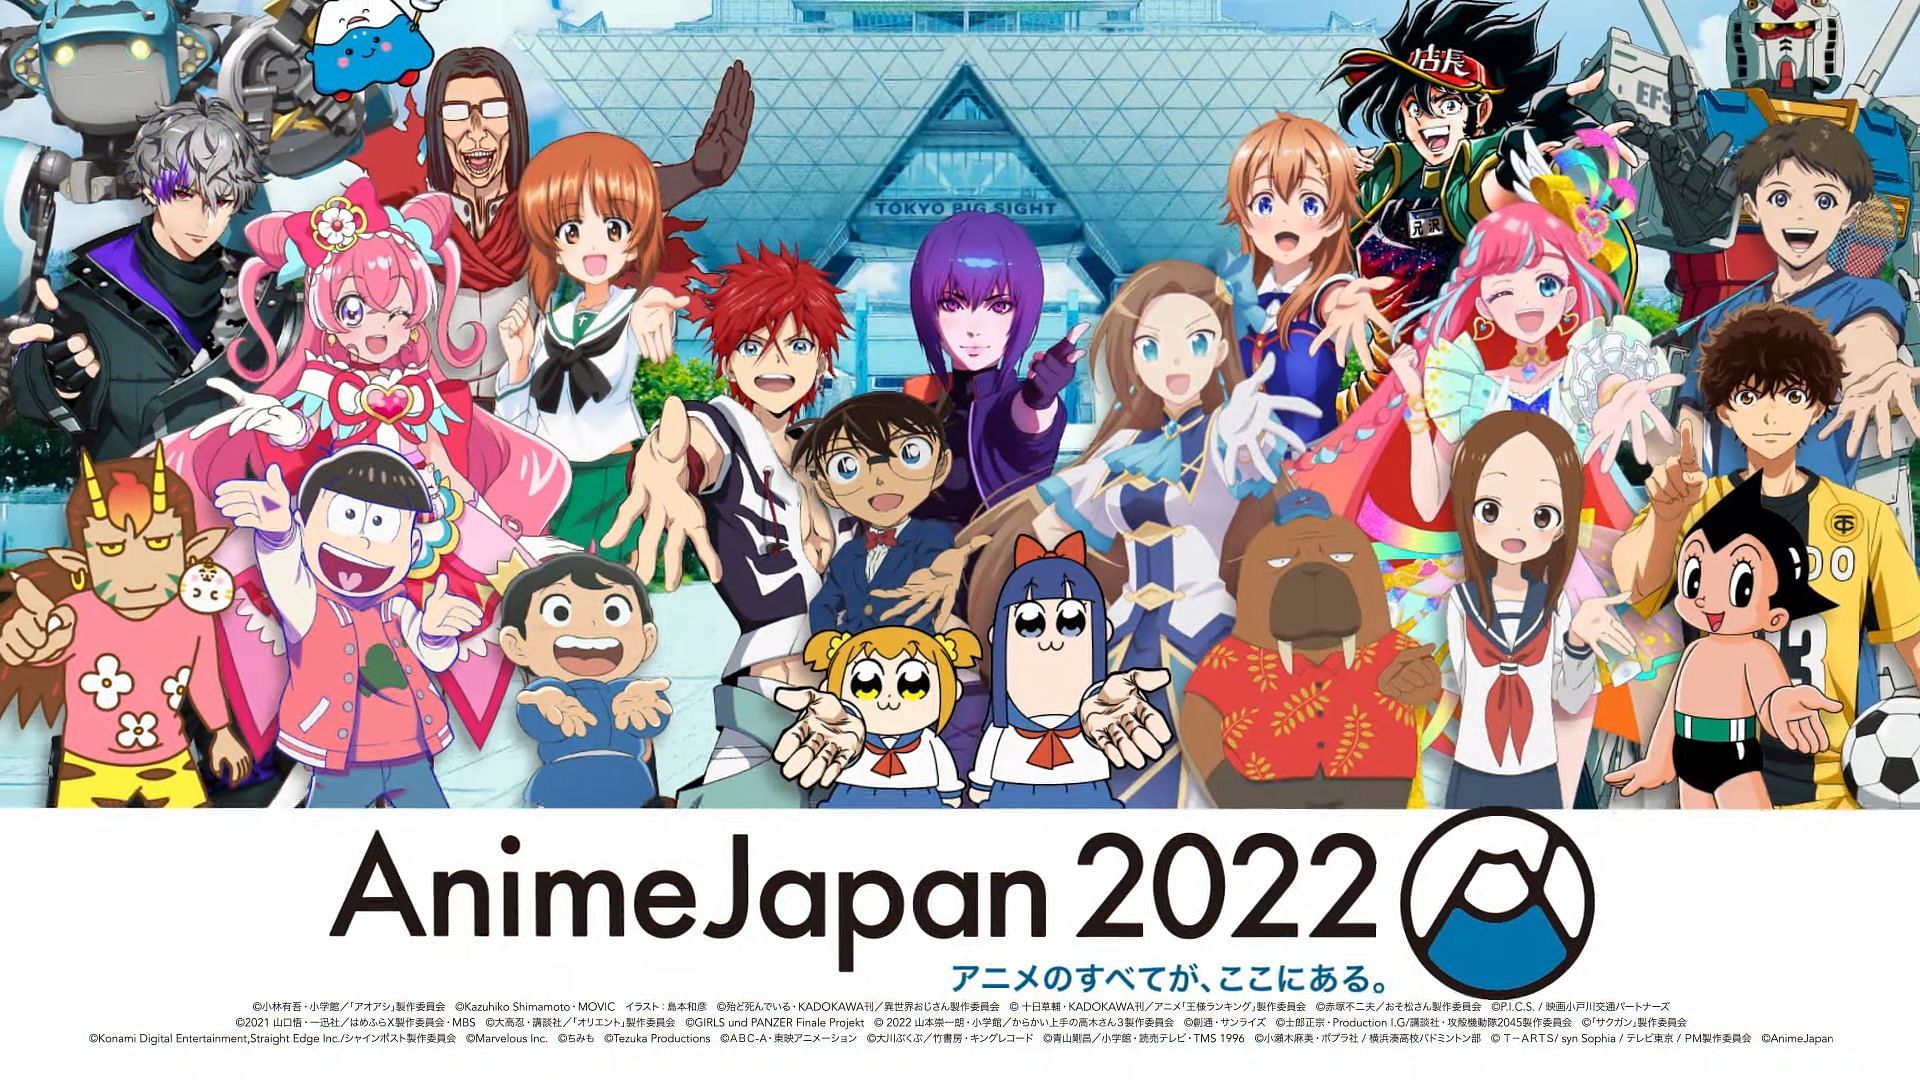 Promotional material for Anime Japan 2022 (Image via Anime Japan)